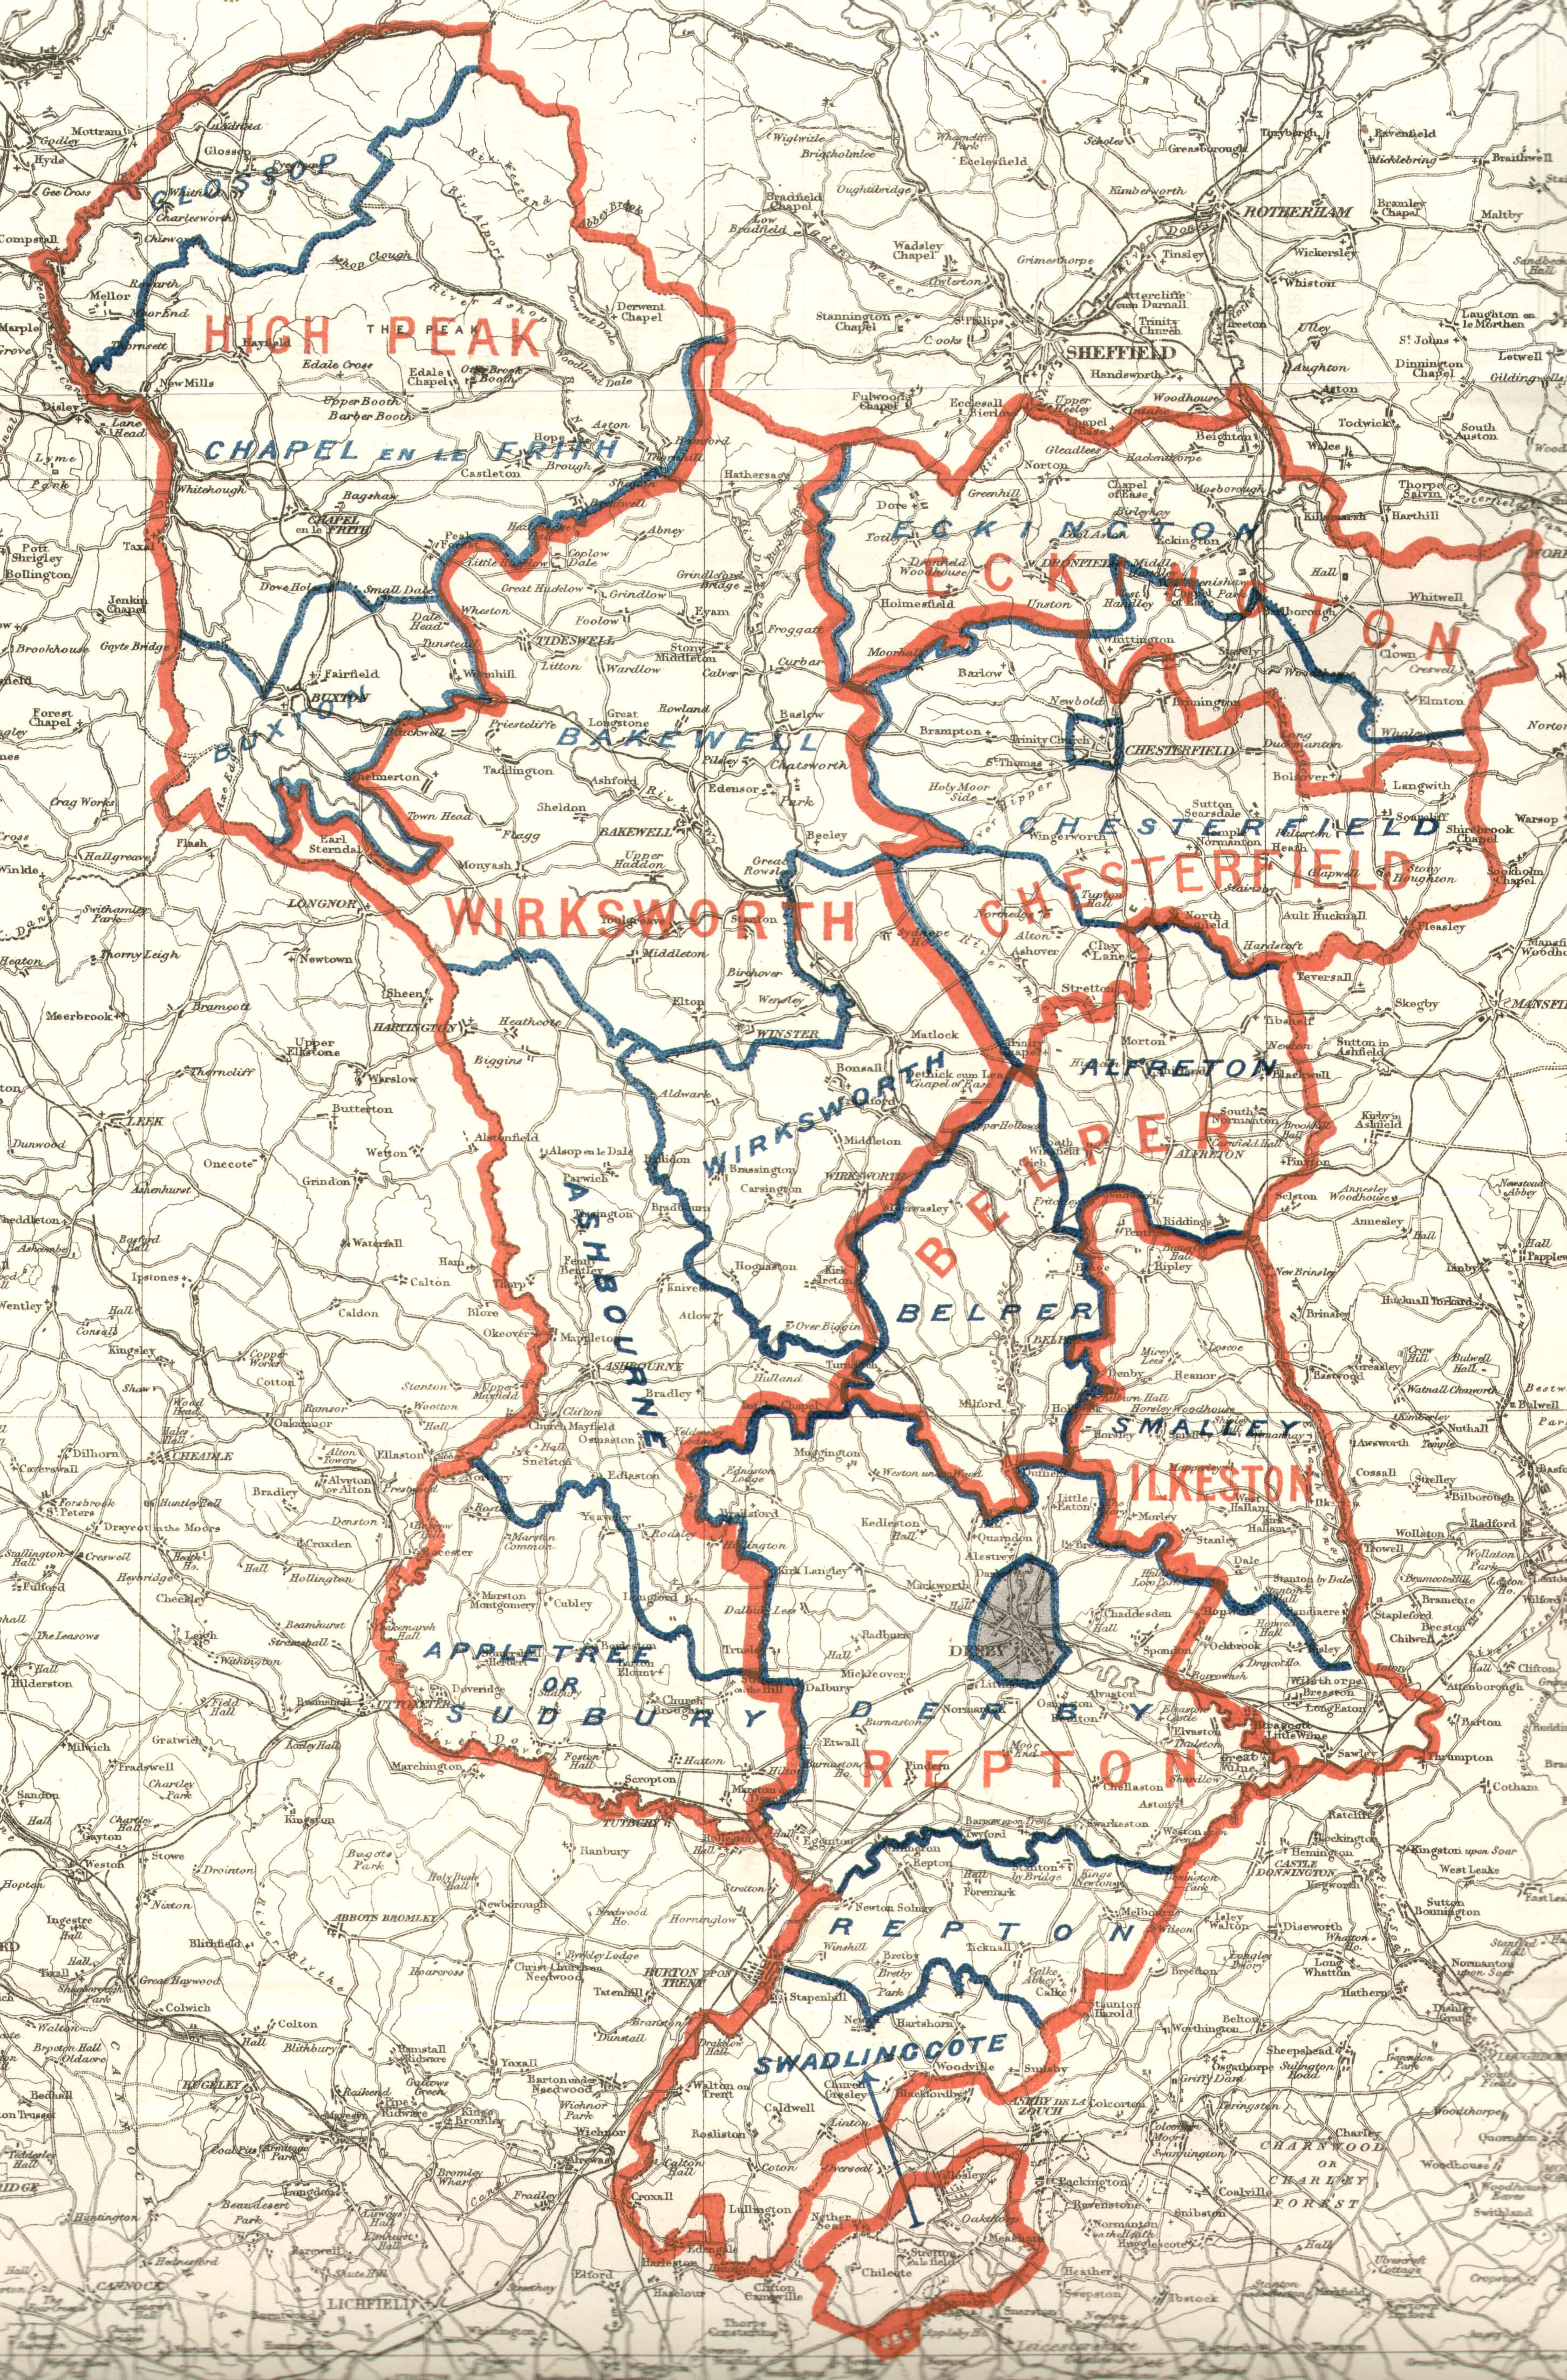 Map of Derbyshire, published 1885